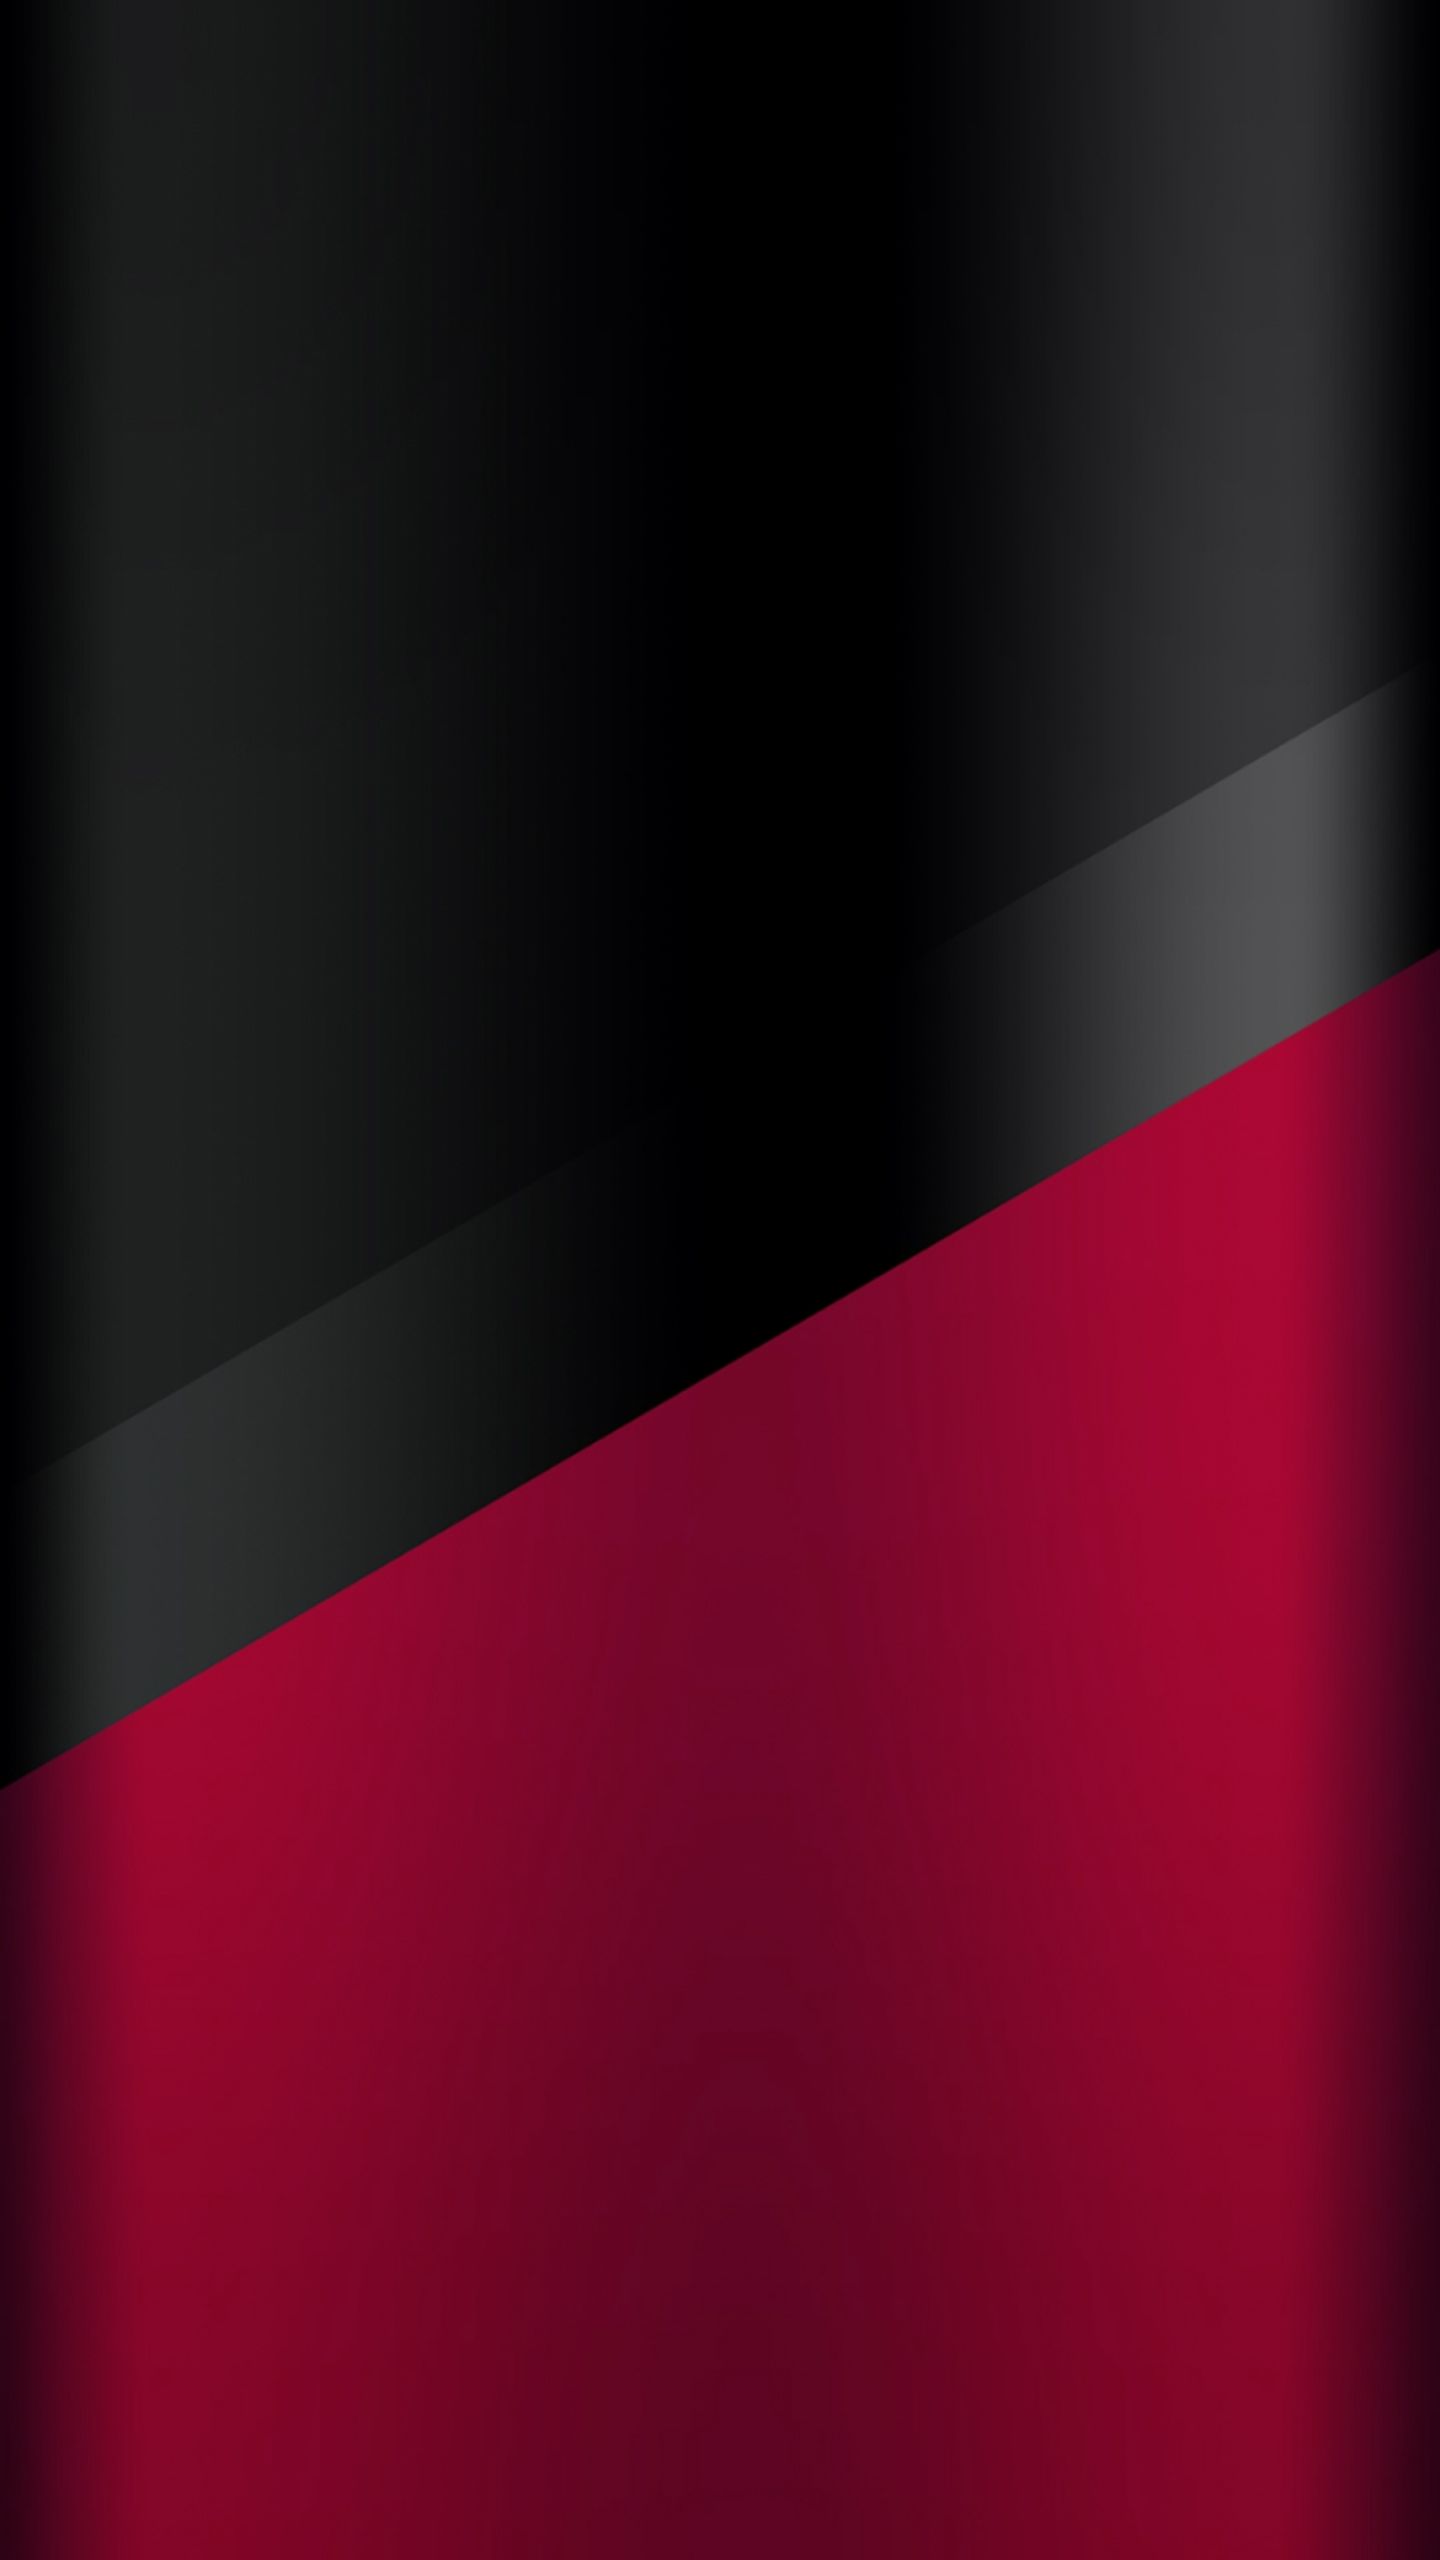 Dark S7 Edge Wallpaper 03 and Red Wallpaper. Wallpaper Download. High Resolution Wallpaper. Samsung wallpaper, Red colour wallpaper, Black wallpaper